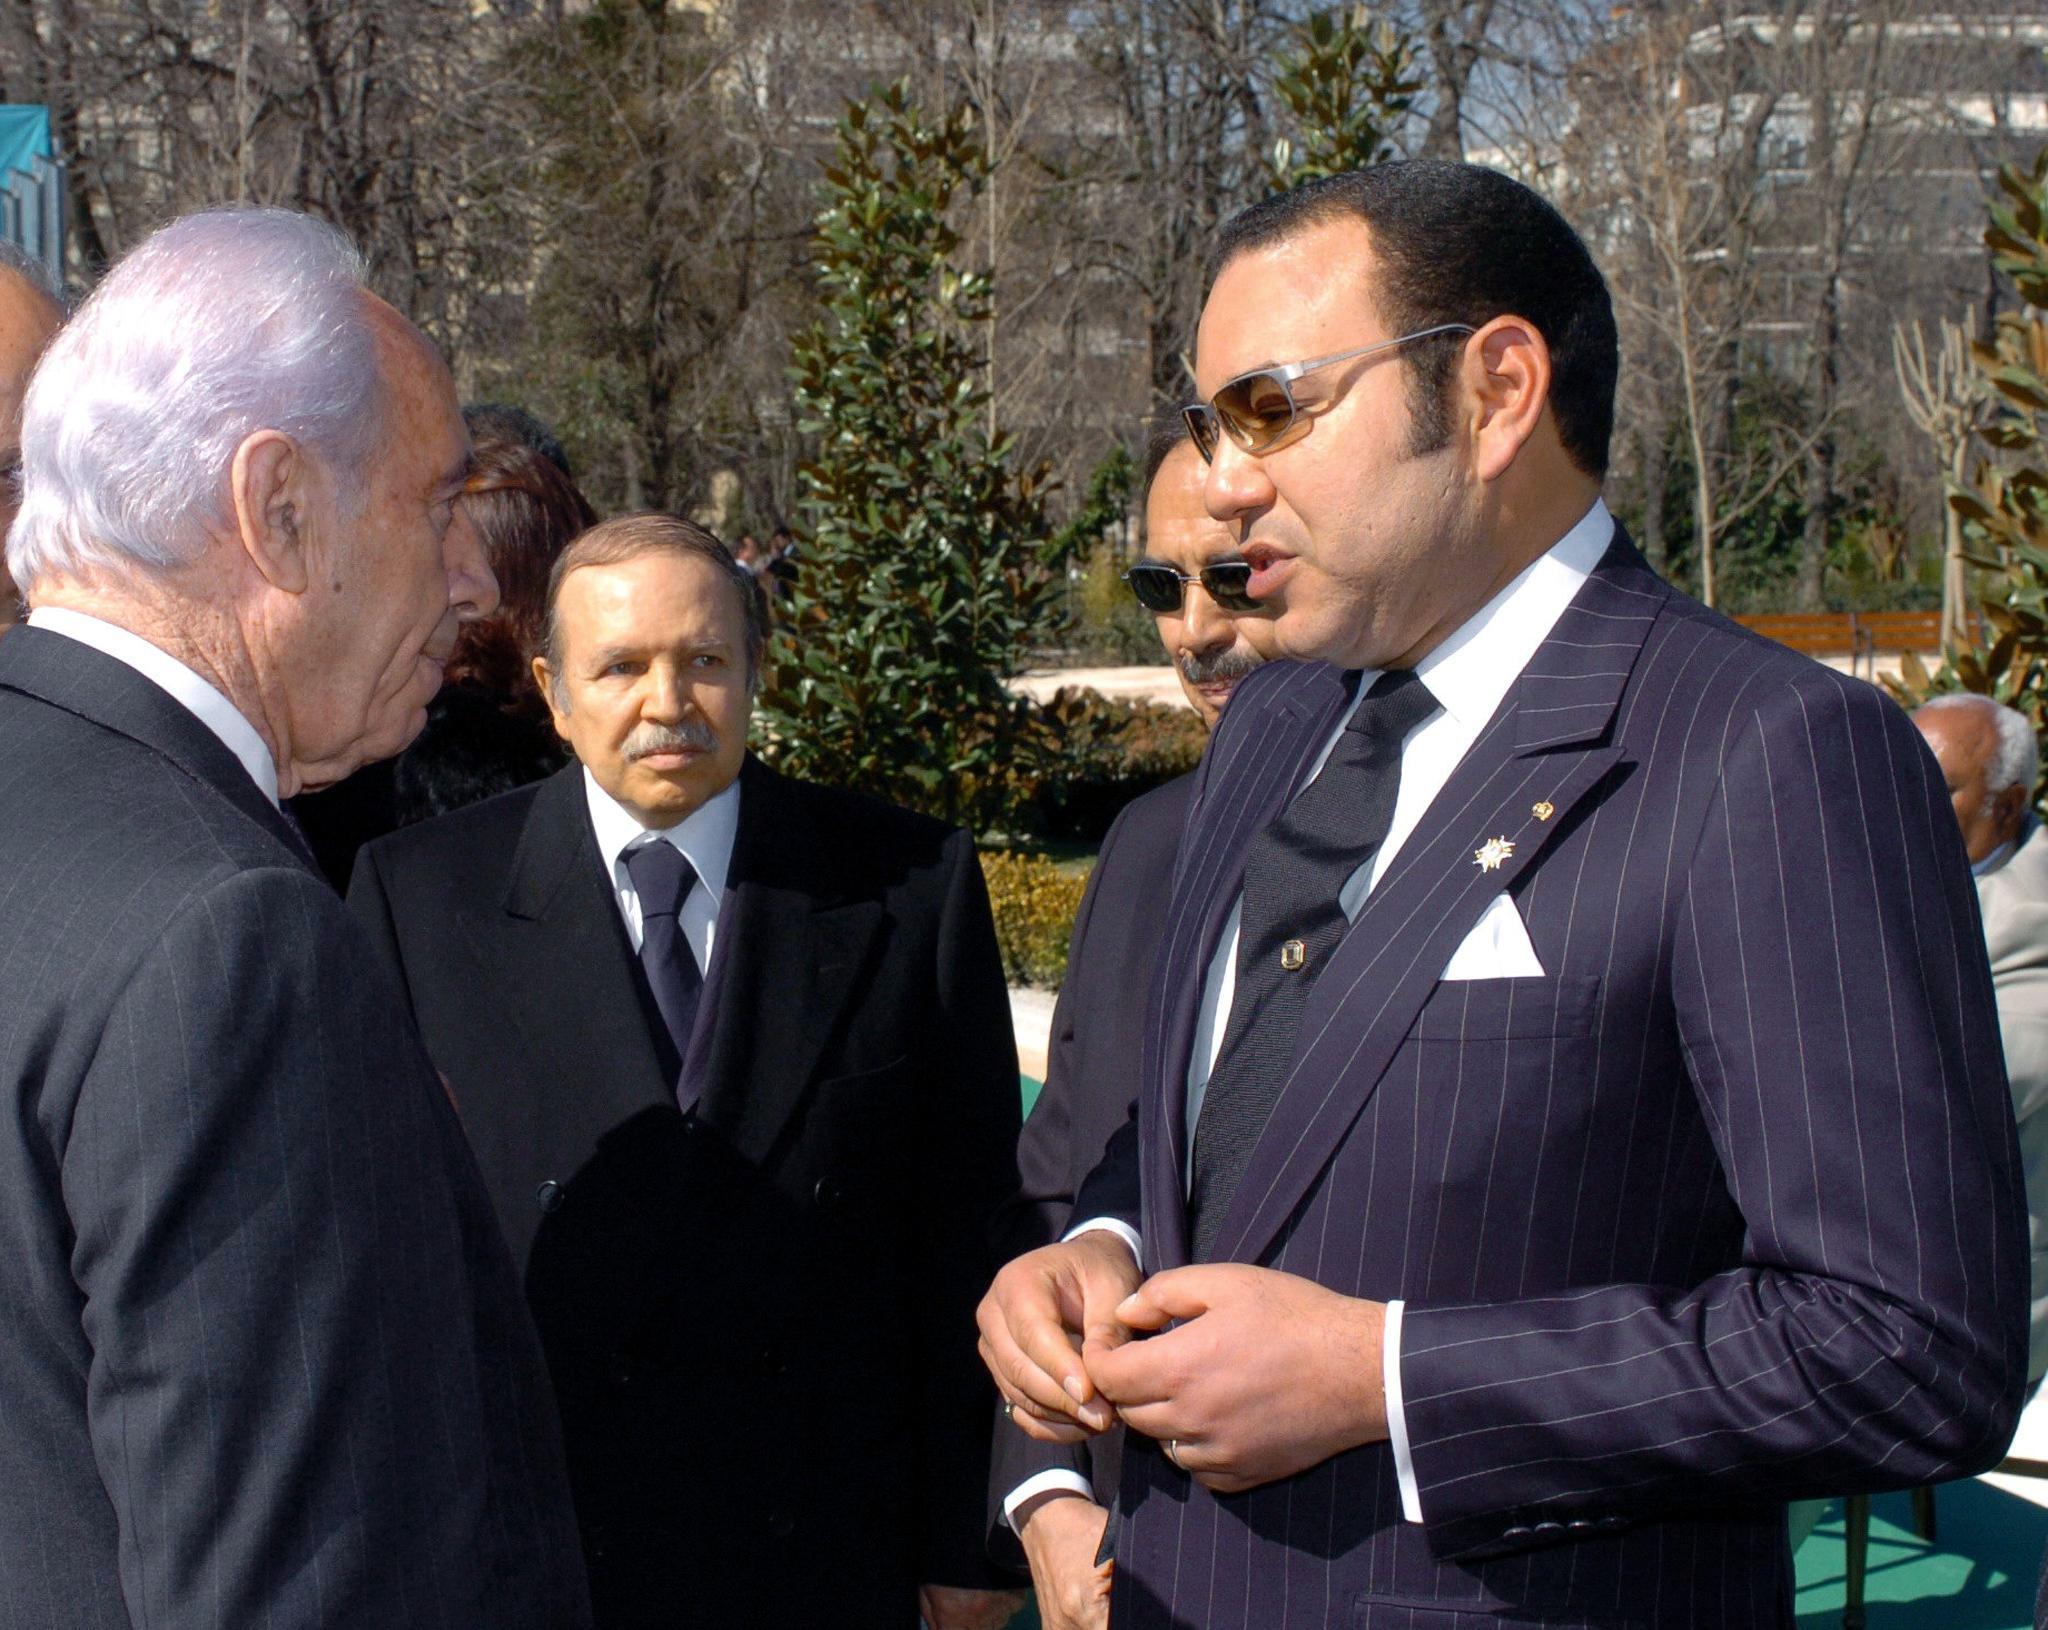 King of Morocco Mohamed VI (L) chats with Israeli Deputy Prime Minister Shimon Peres (R) as President of Algeria Abdelaziz Bouteflika (C) looks on, 11 March 2005